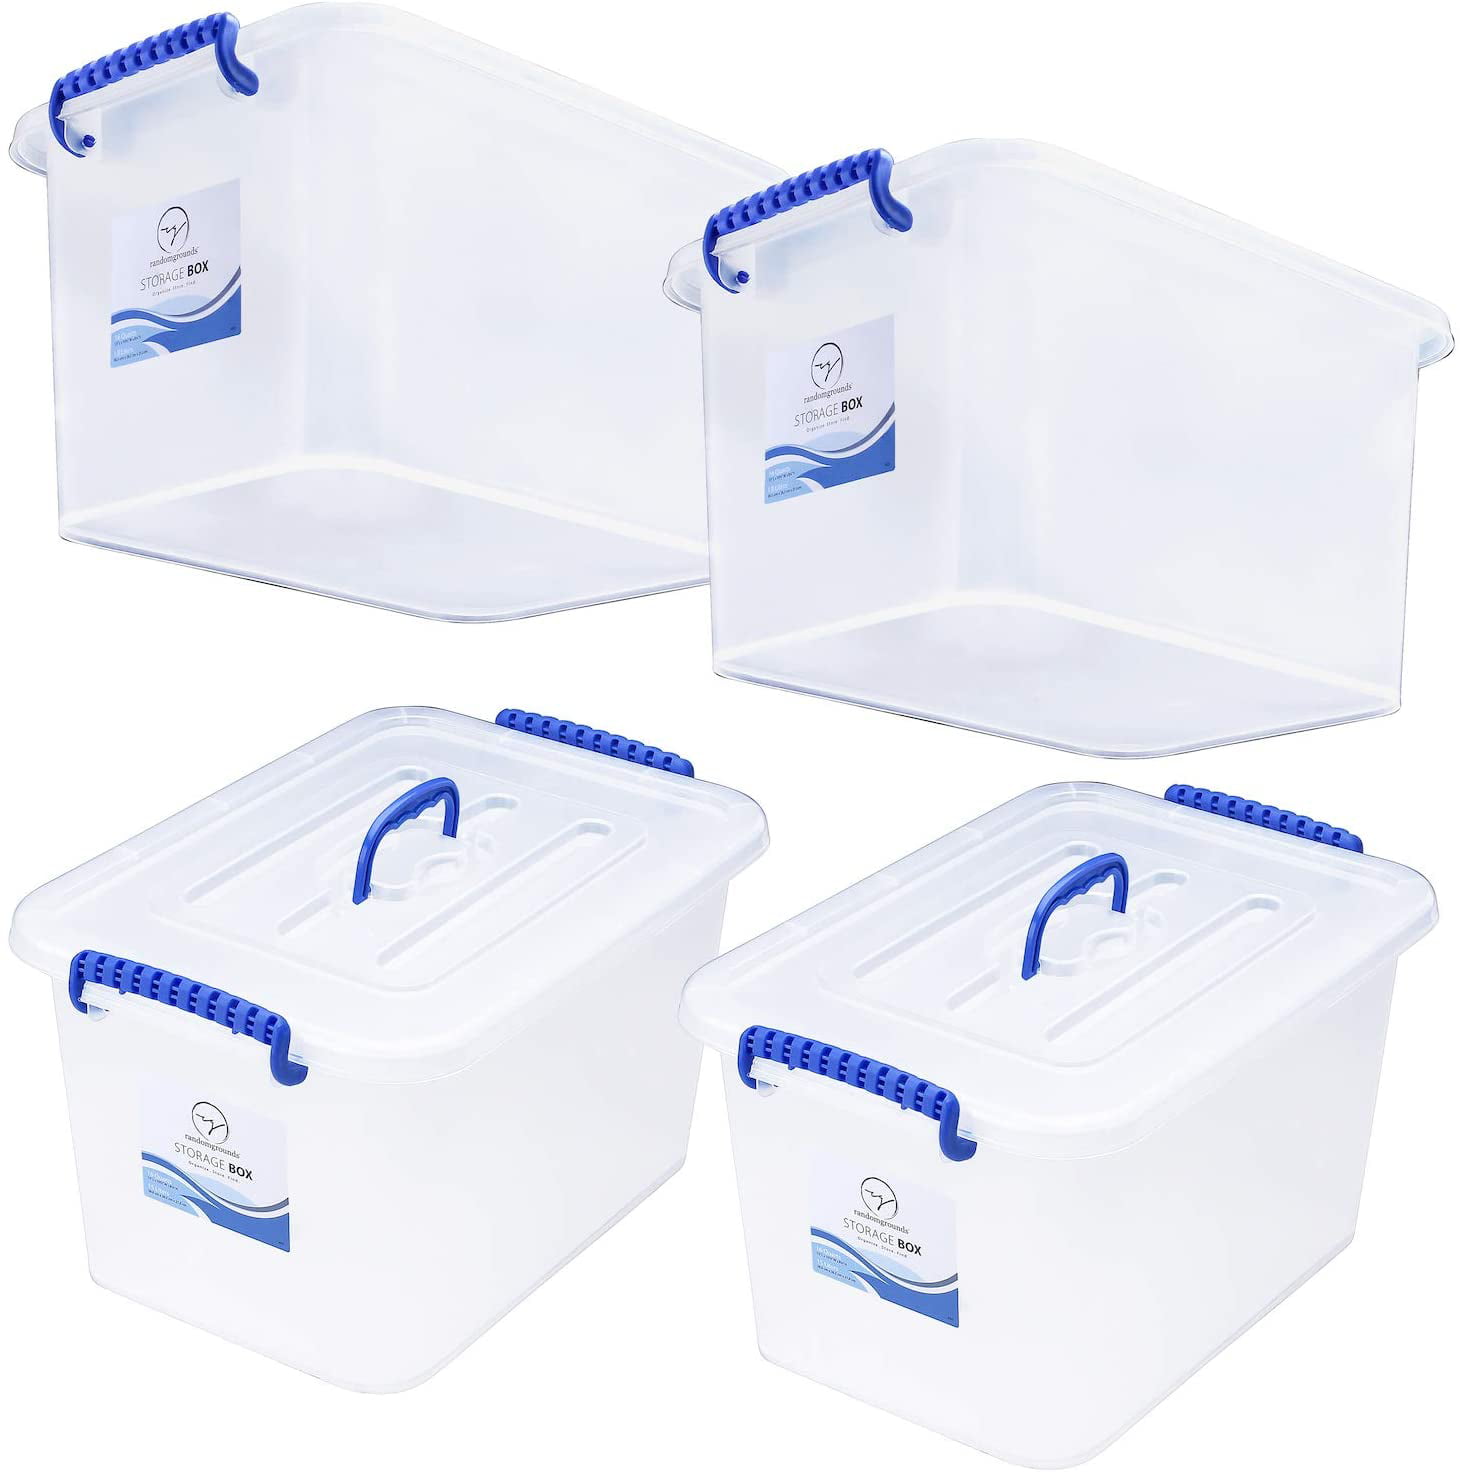 Black White 6 Packs Tstorage Plastic Storage Baskets for Organizing with Handle